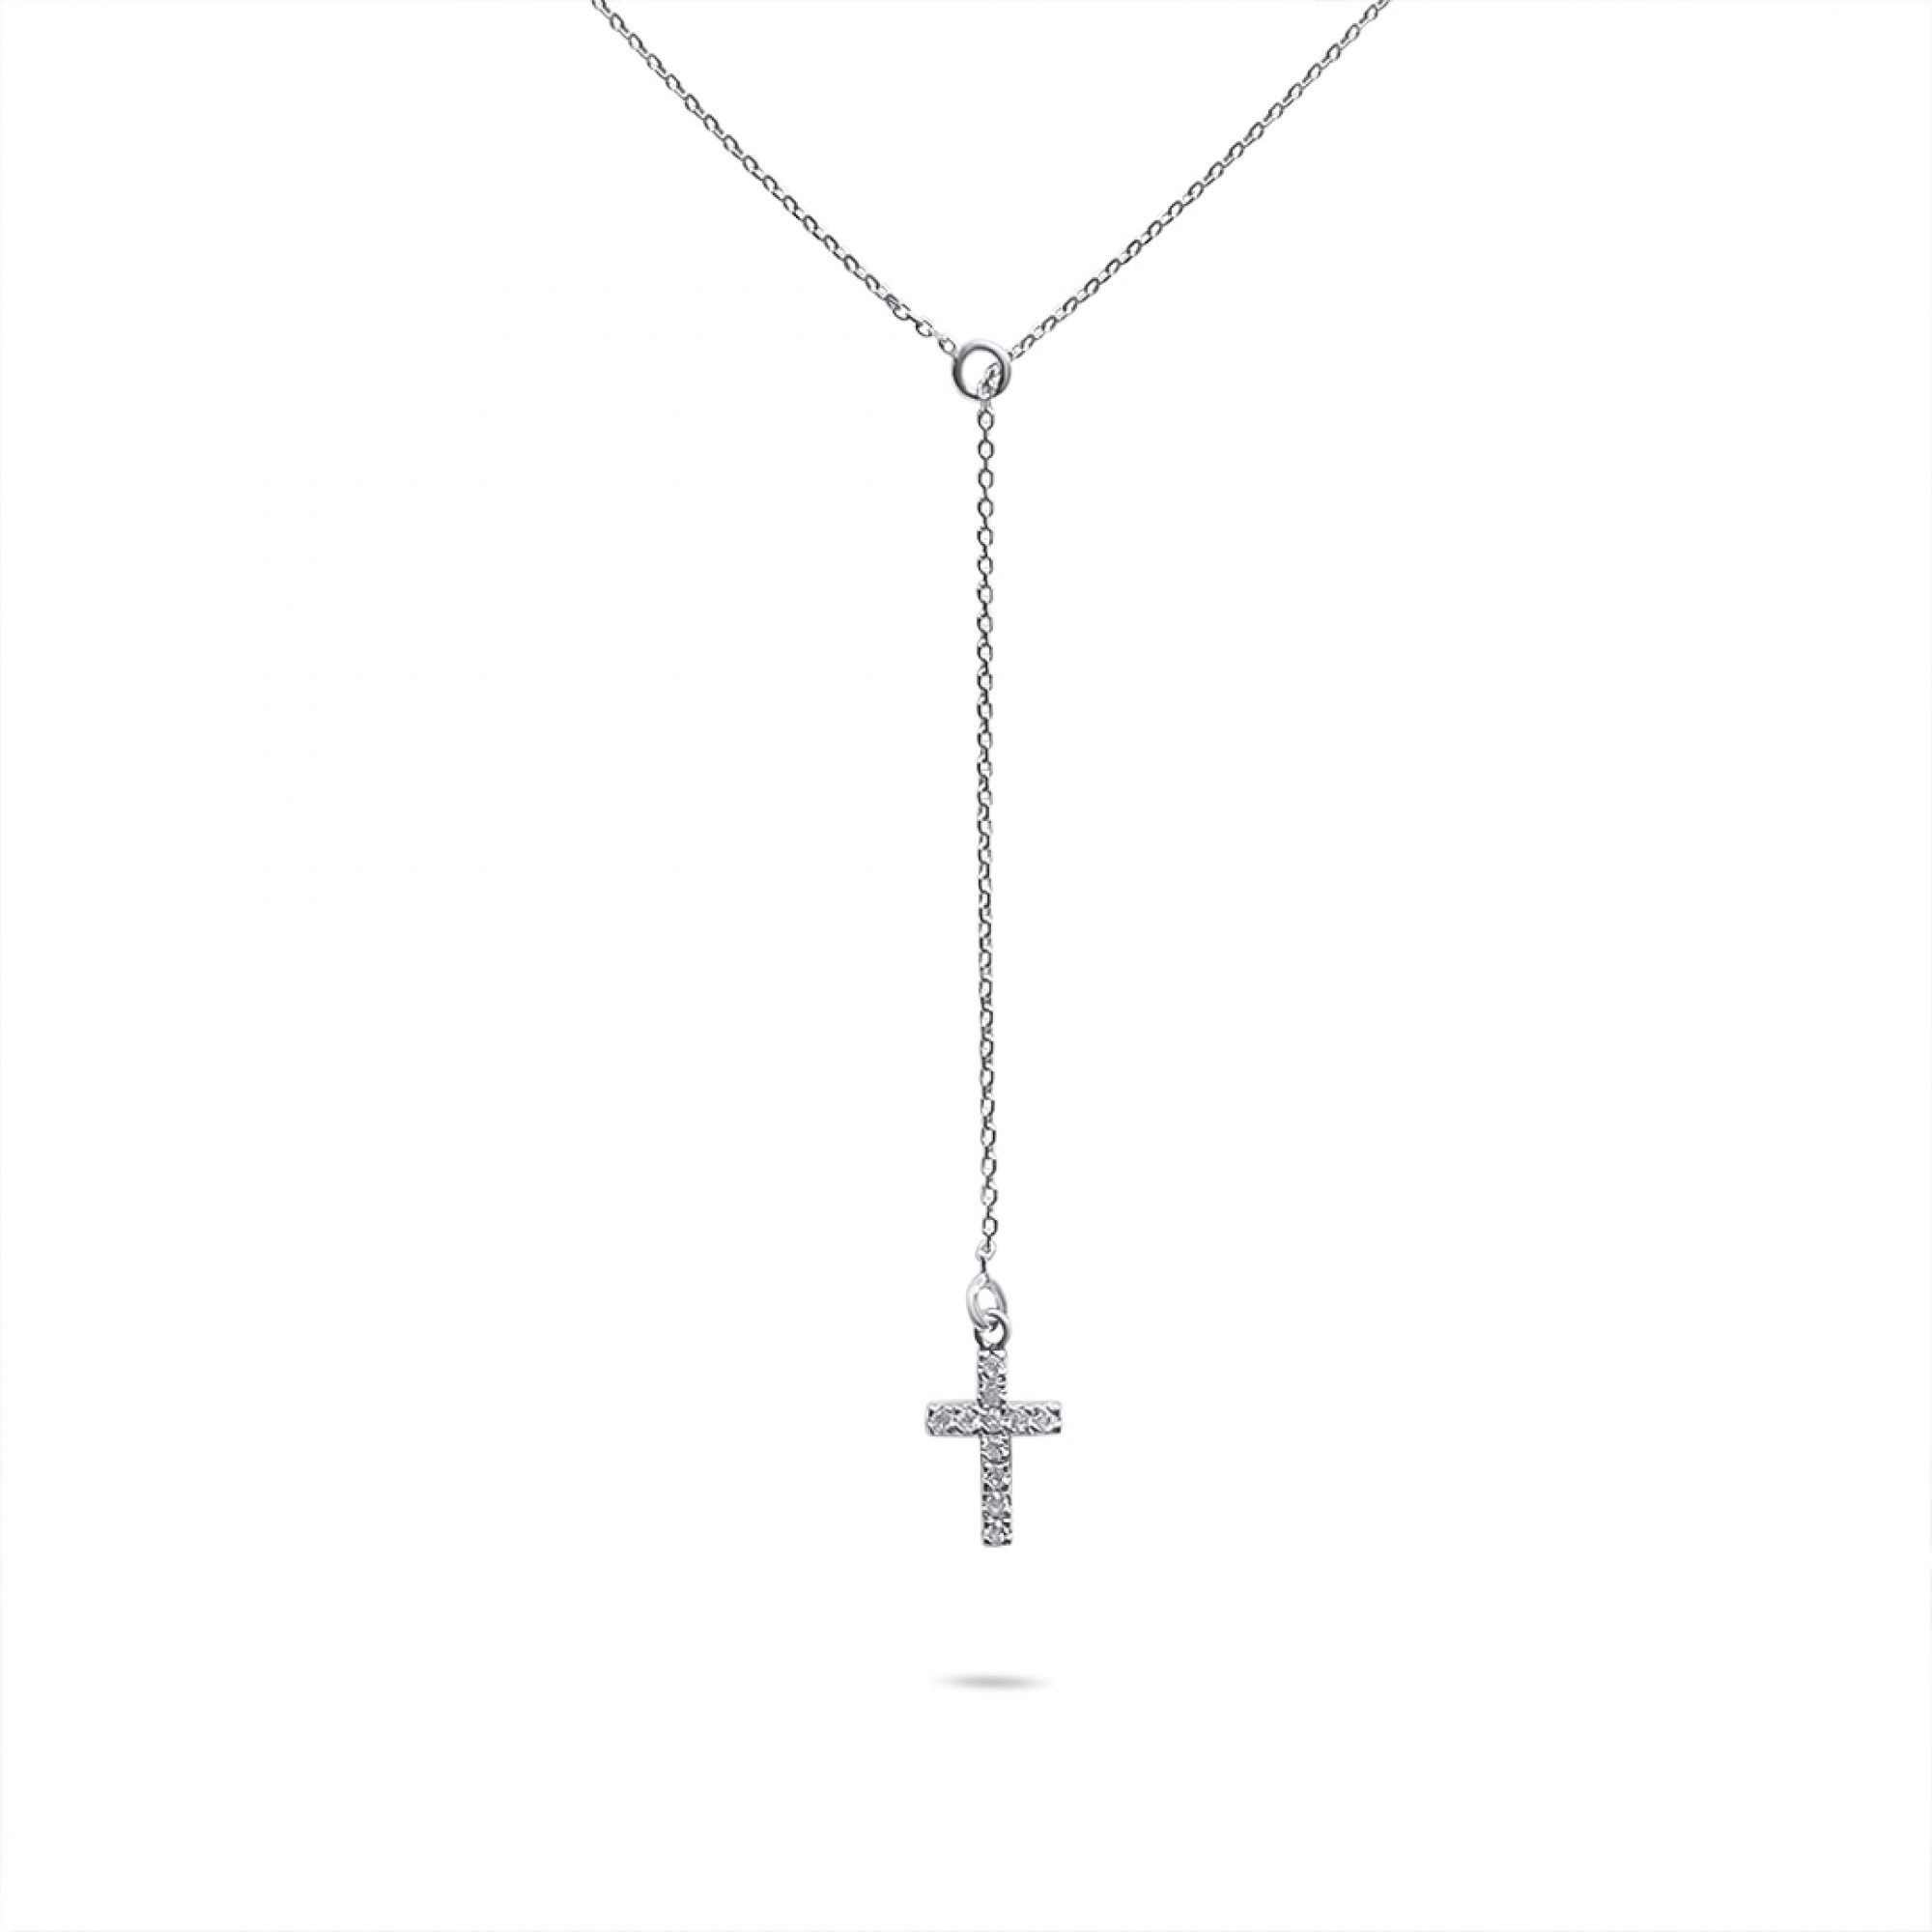 Y-style cross necklace with zircon stones